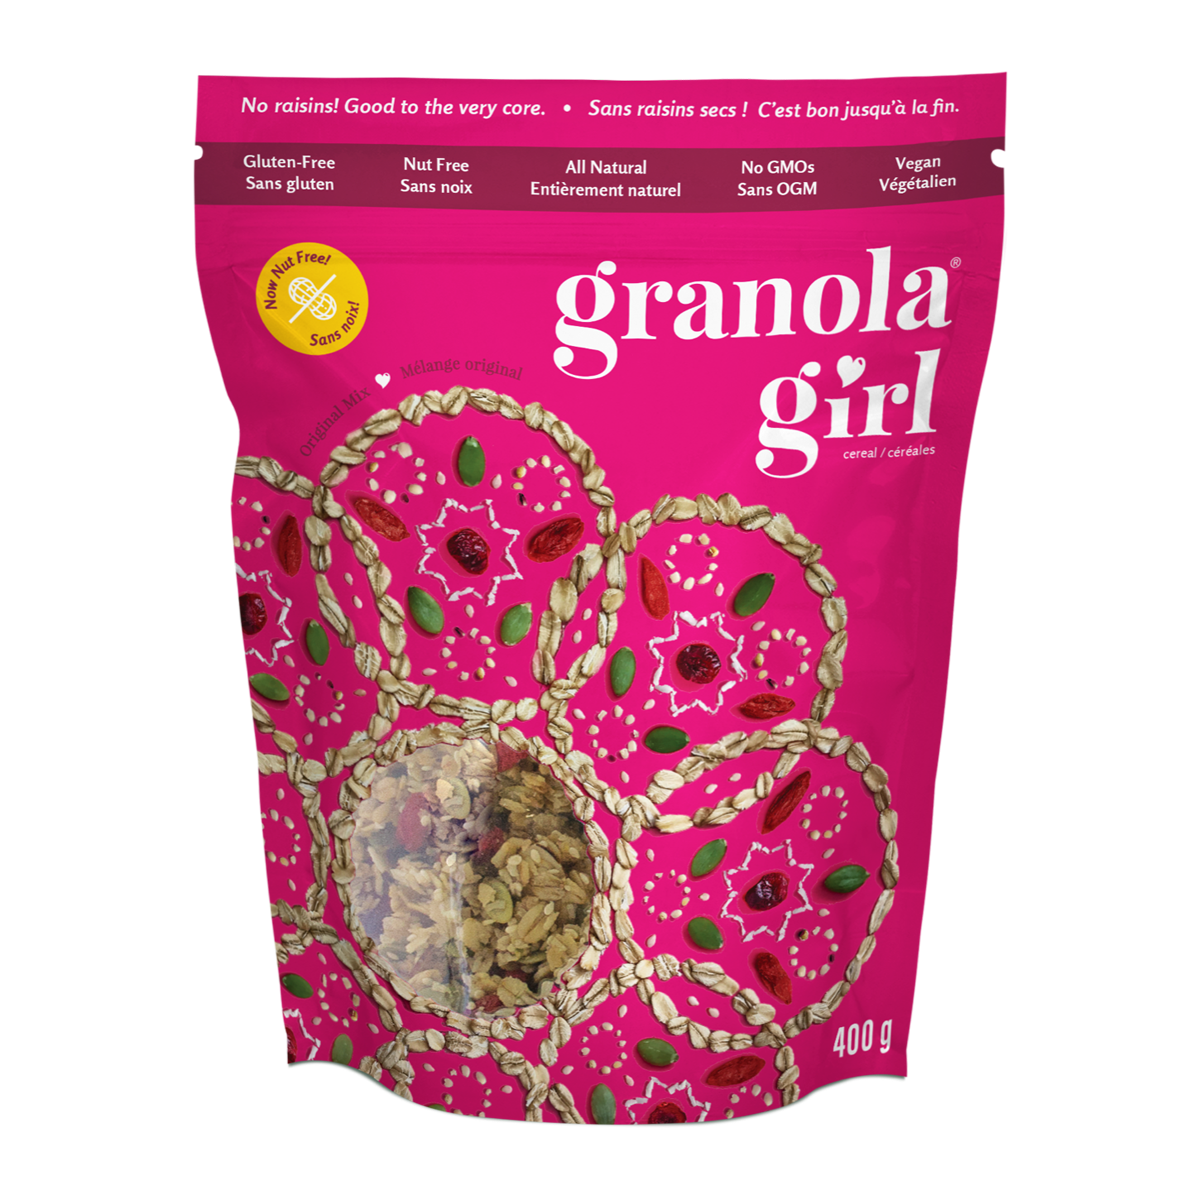 quirky granola girl